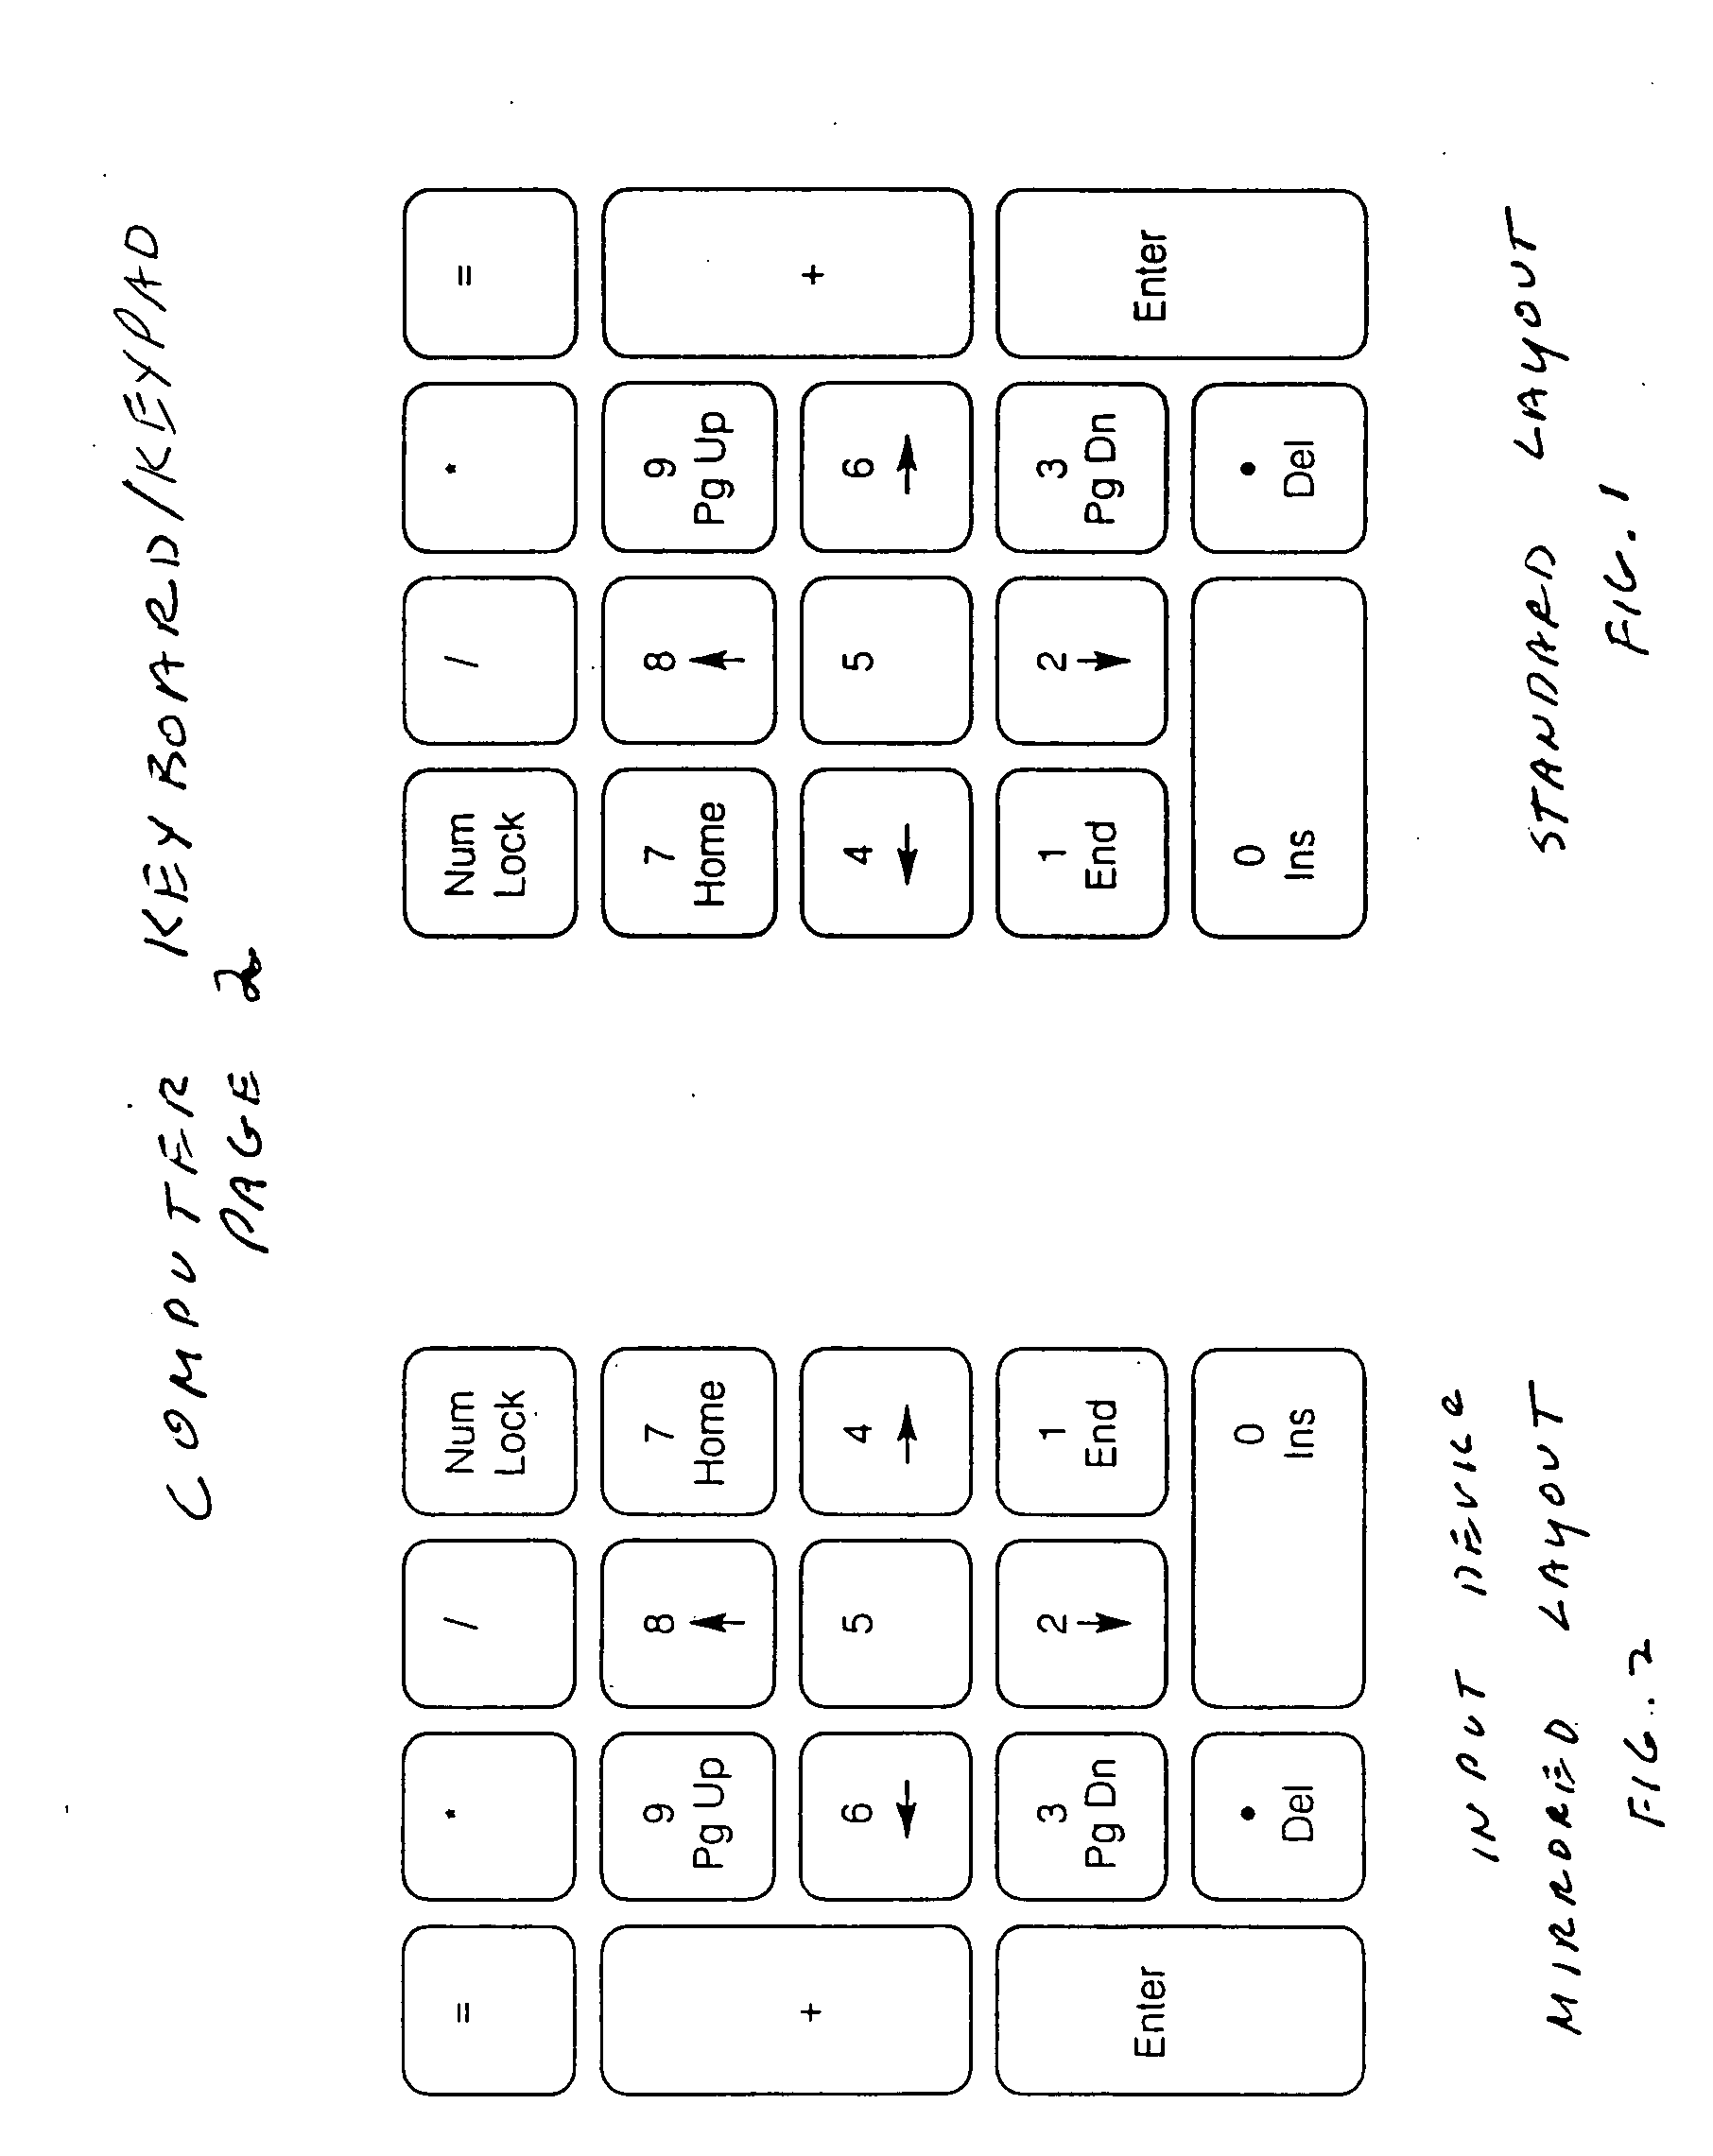 Dual numerical keyboard based on dominance